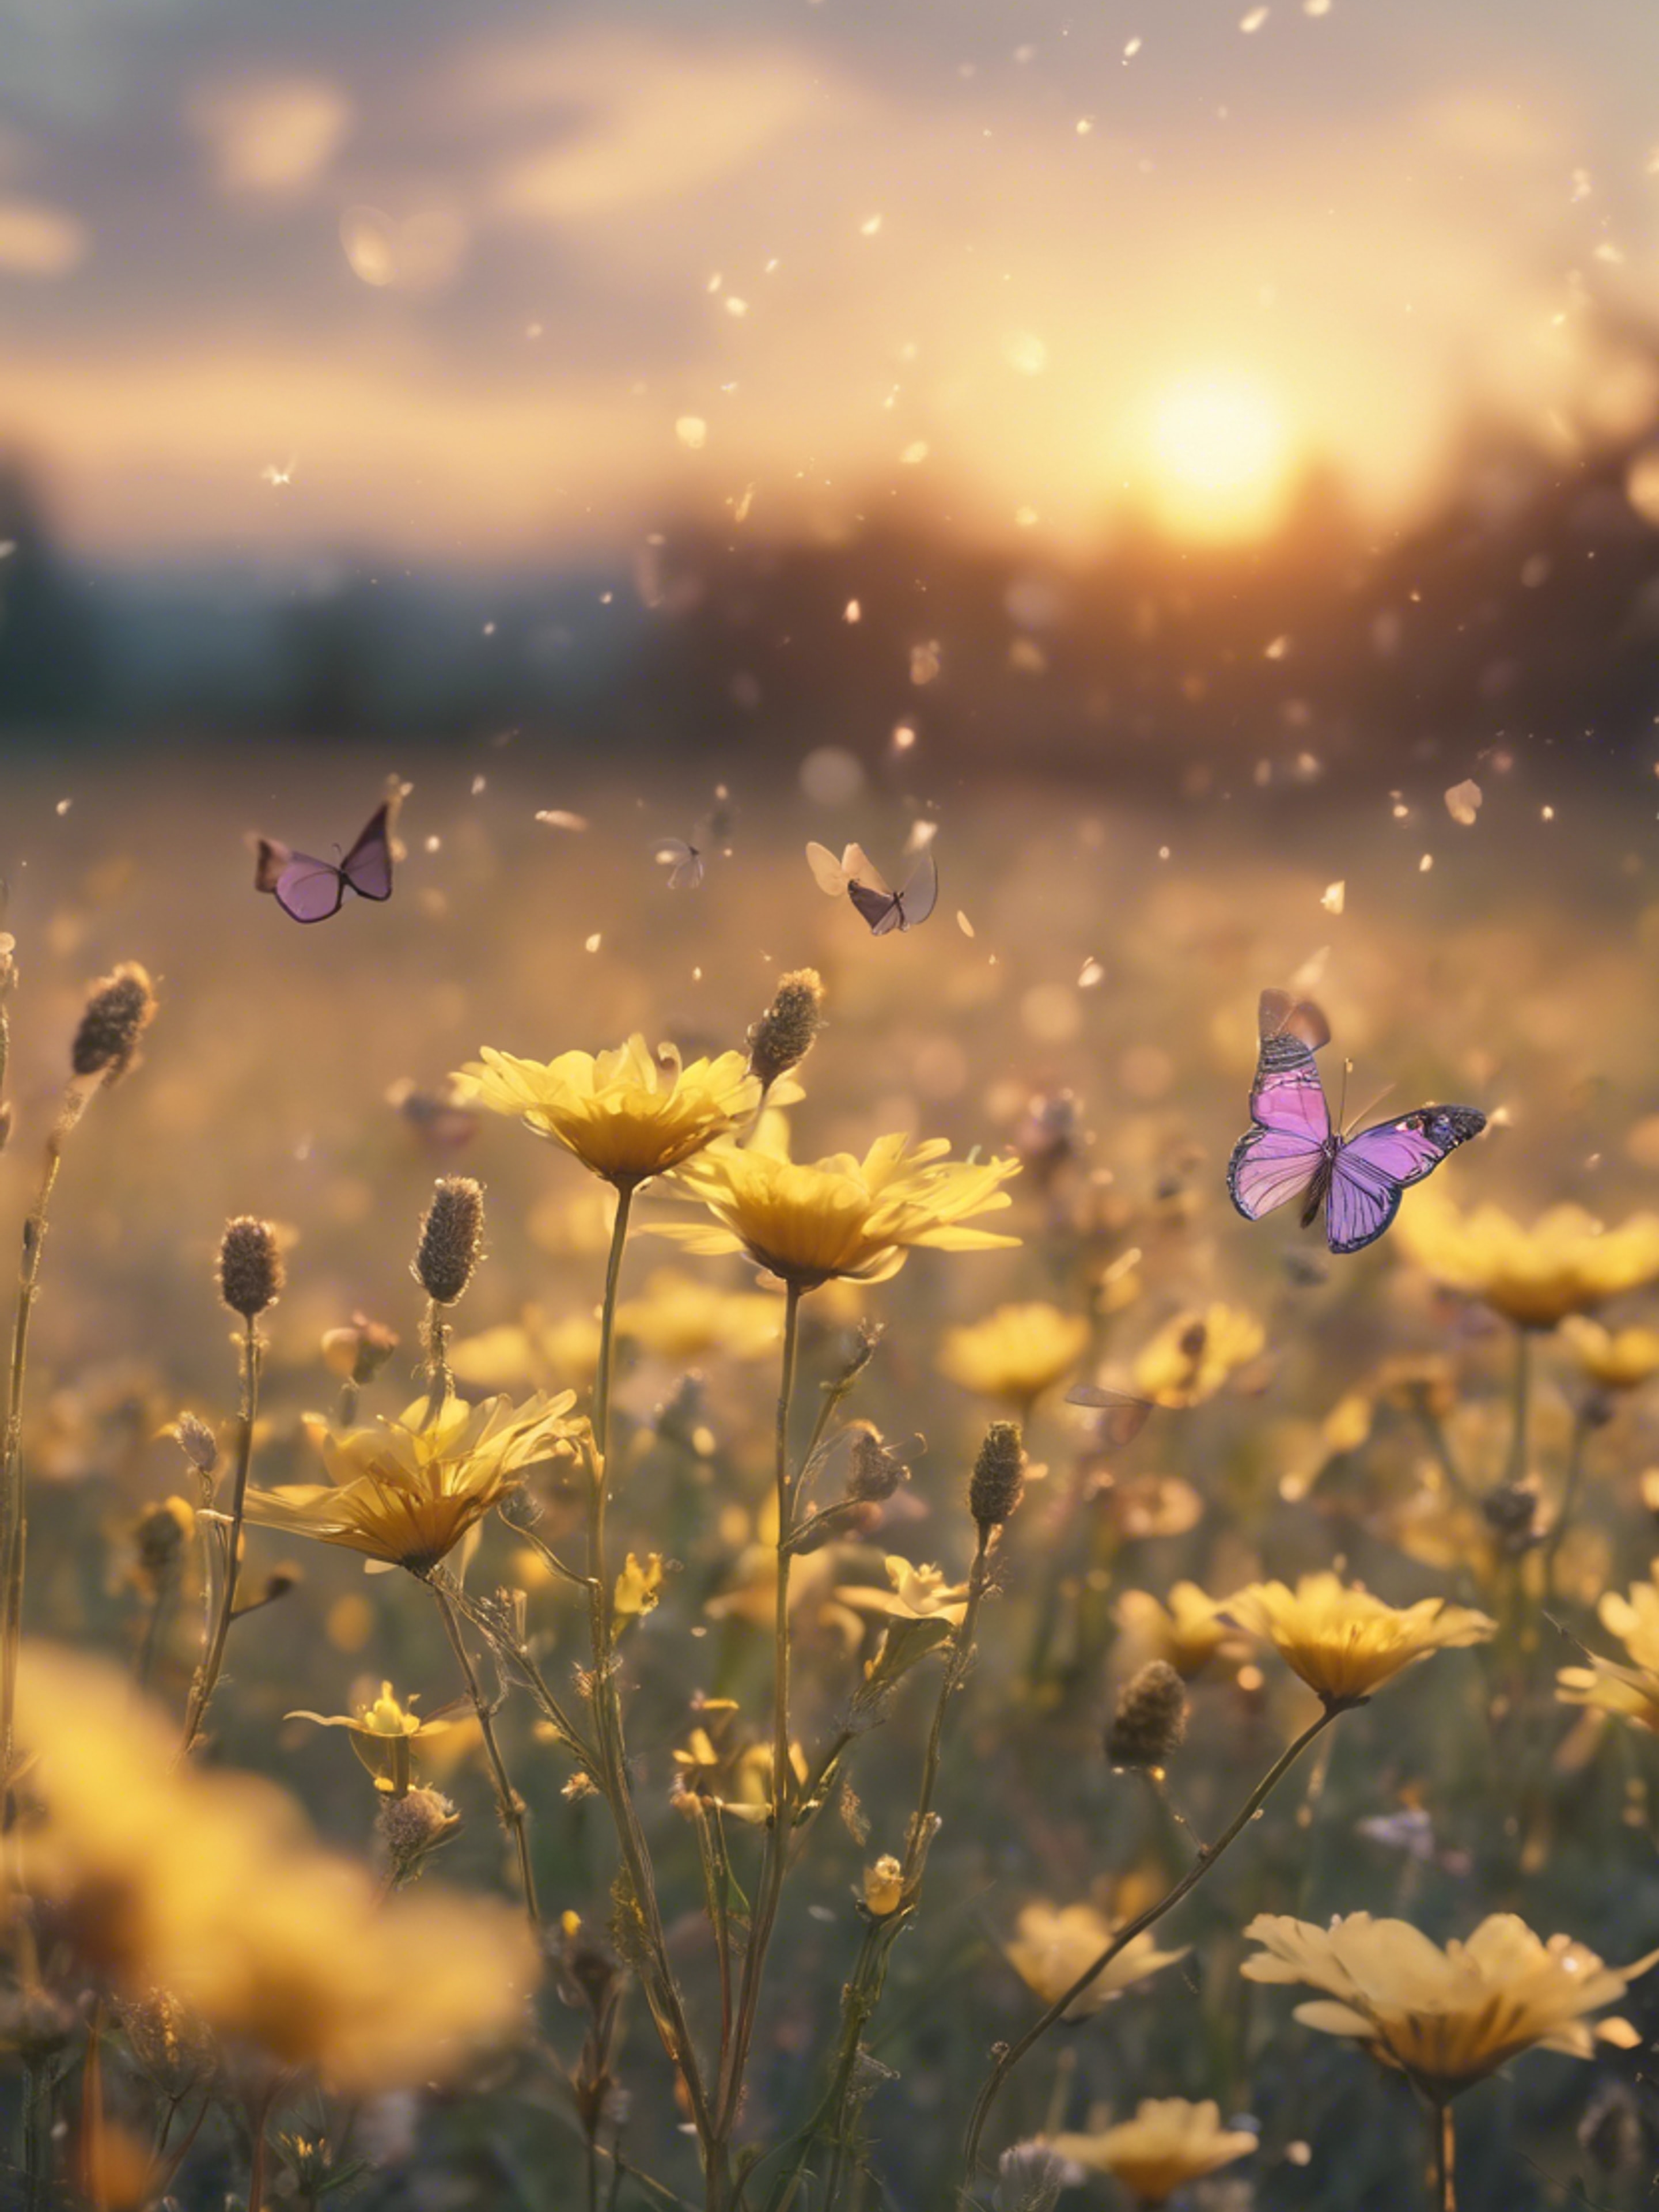 Sunset scene overlooking a meadow filled with pastel yellow flowers and kawaii butterflies fluttering above them. Ფონი[4de922e1f50d428d8d1a]